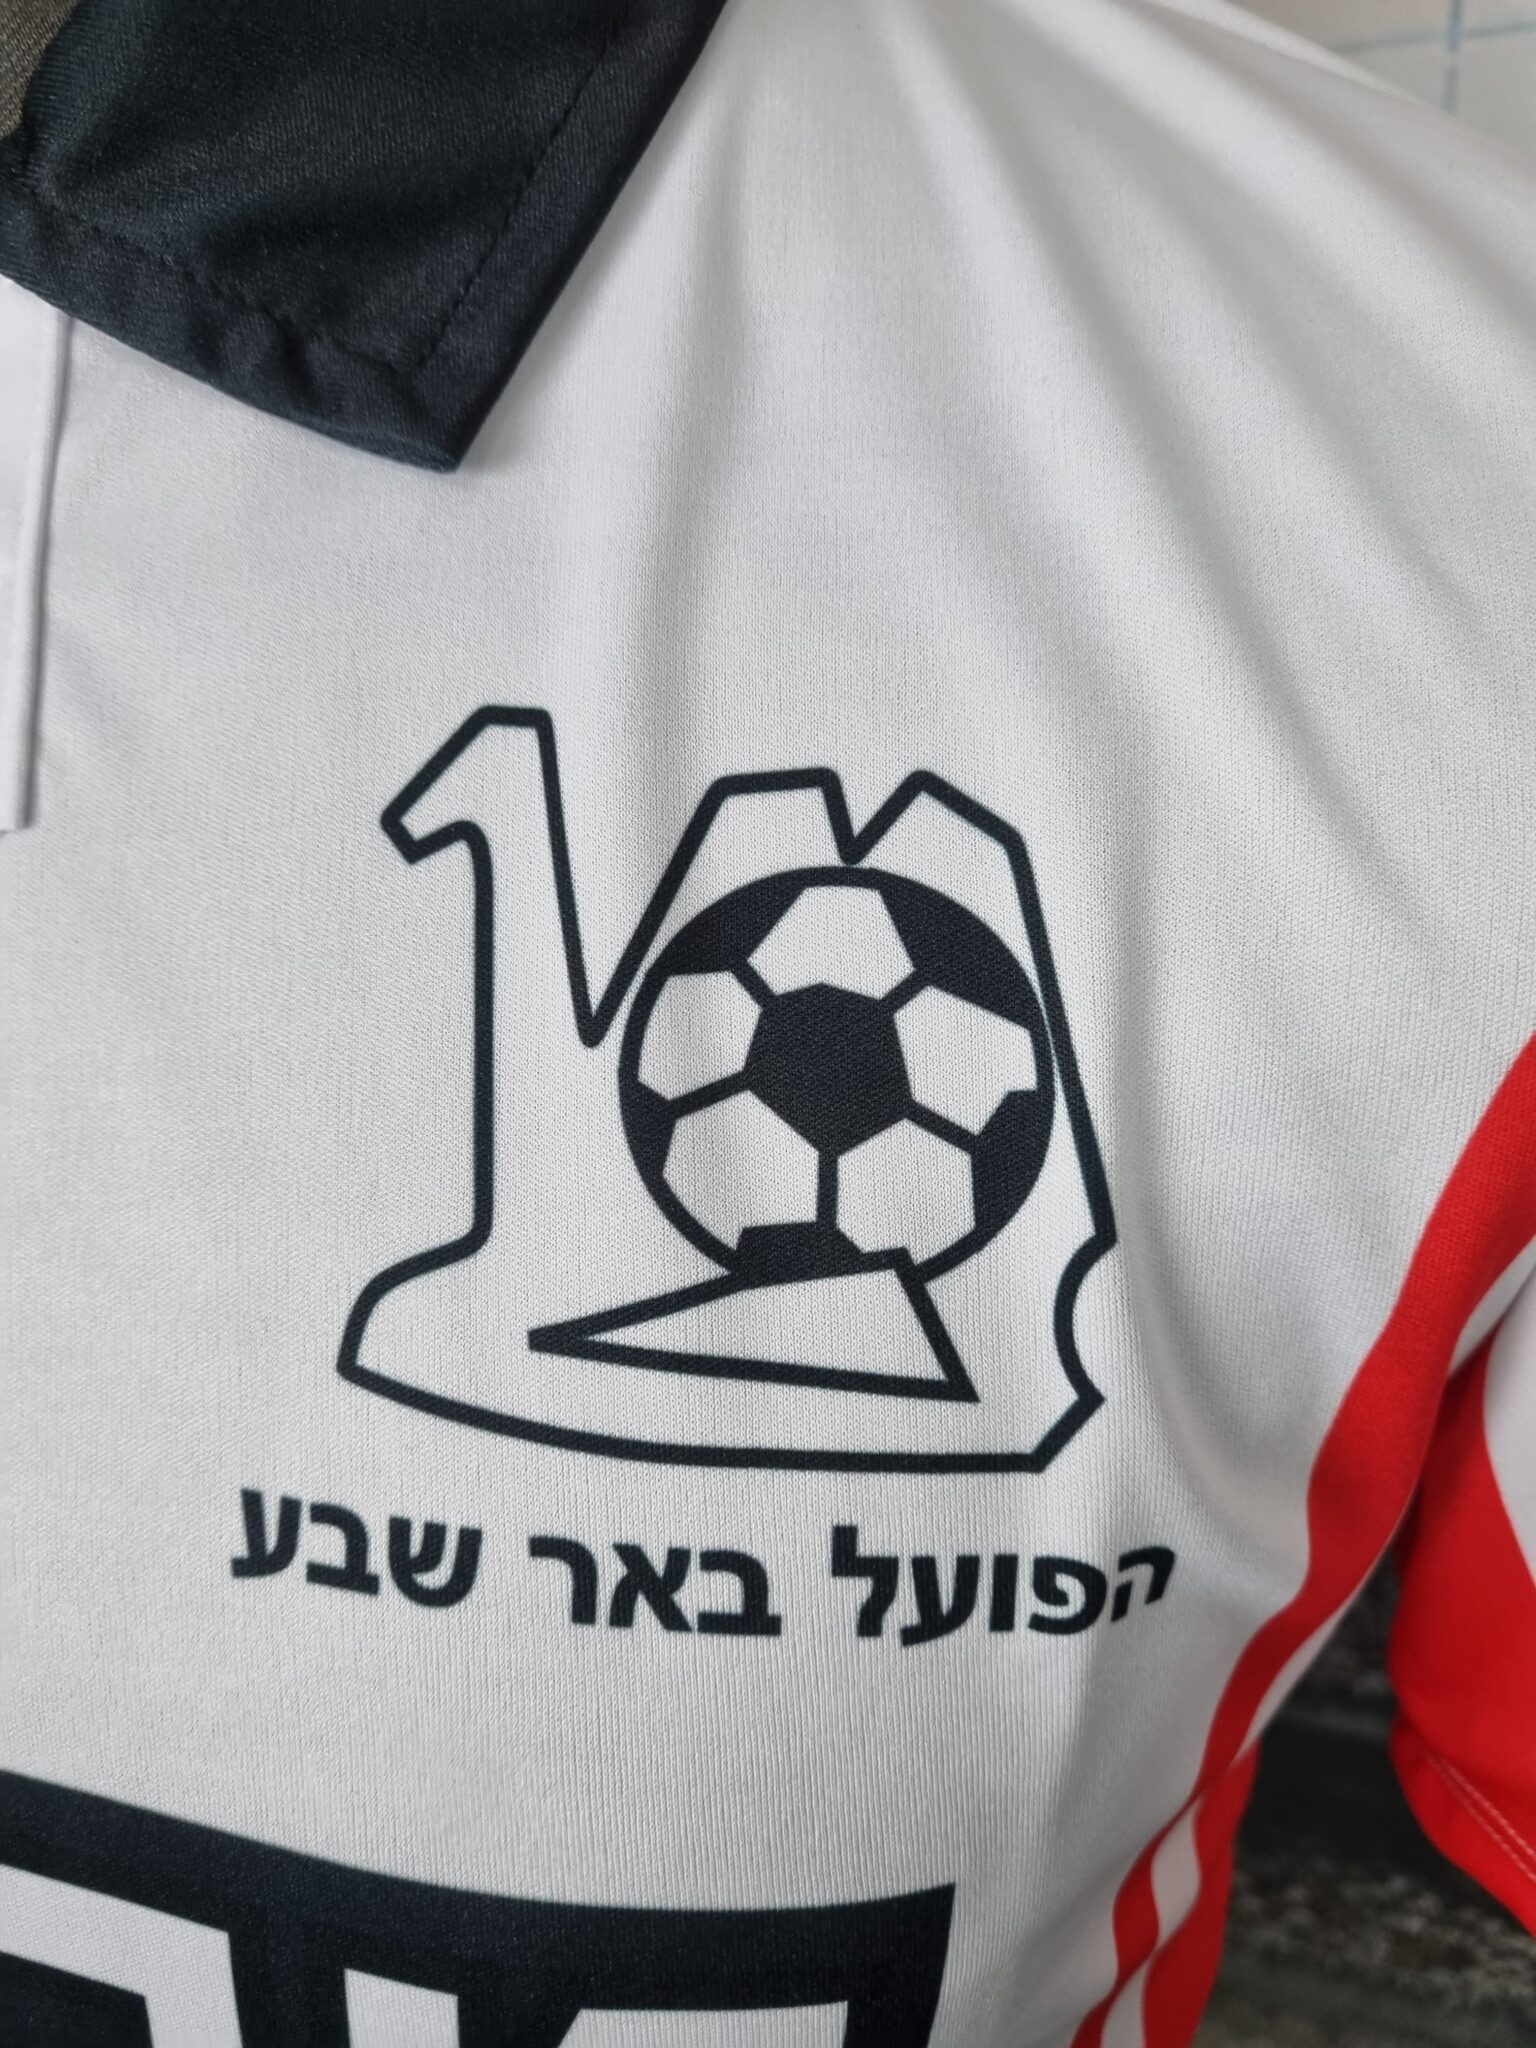 Hapoel Beer-Sheva Shirt Vintage Retro 1994/1995 Jersey Israel Football #9 Serhiy Husyev - Sport Club Memories